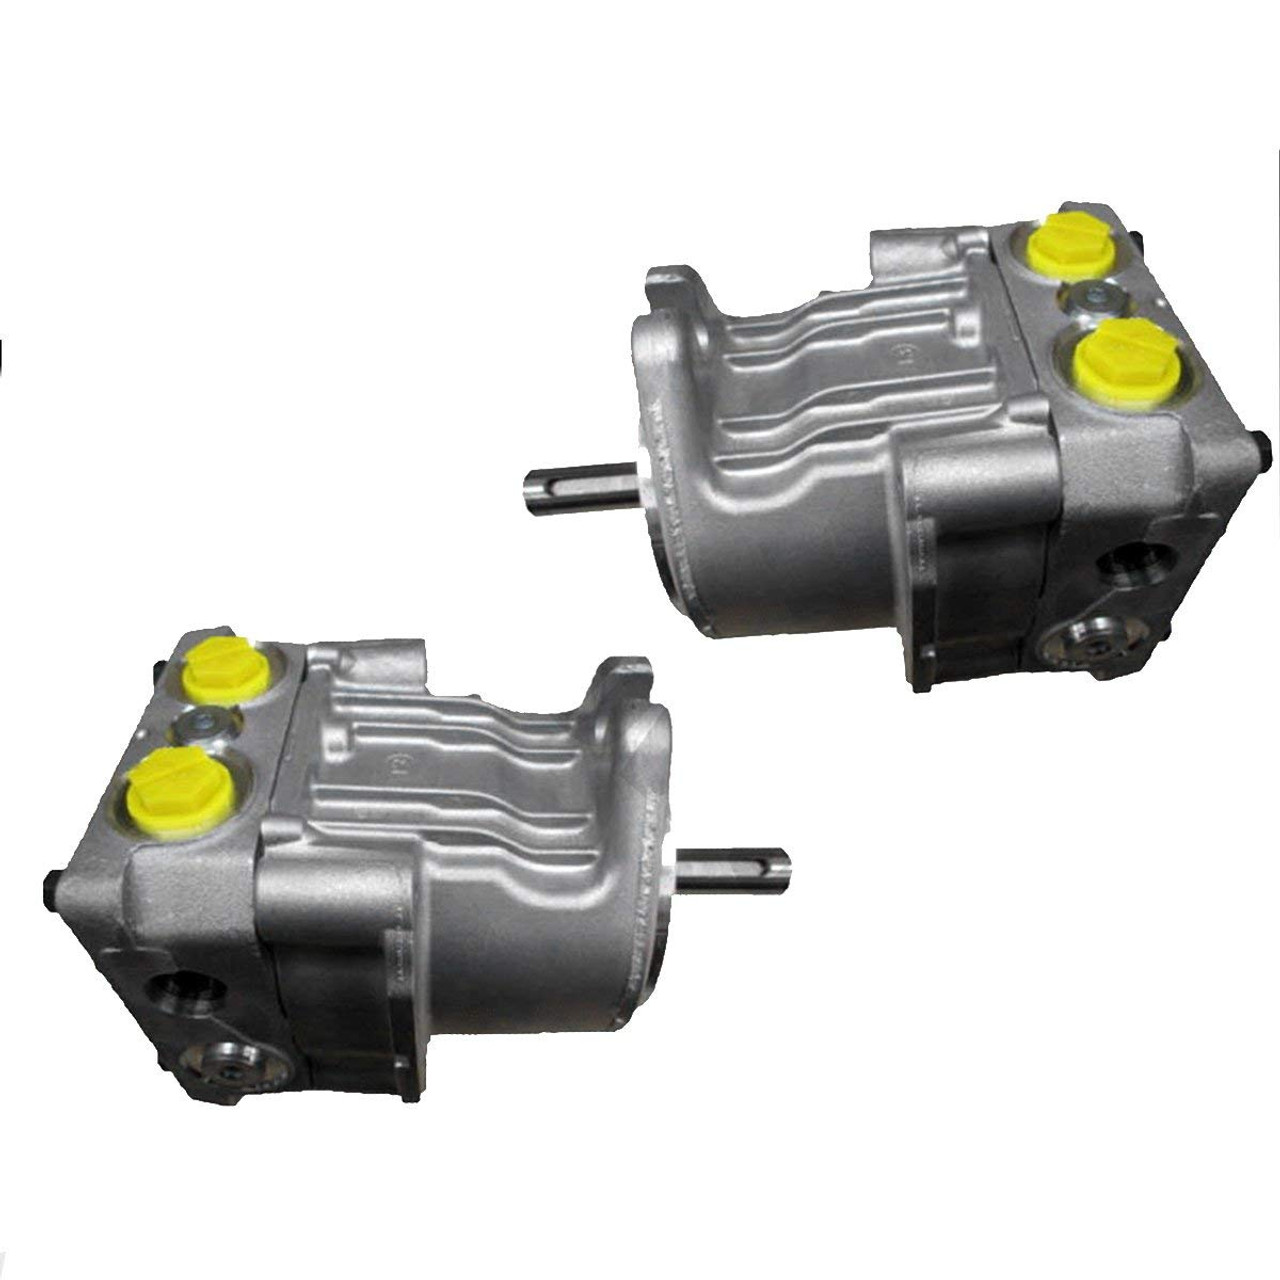 Hydro Gear Repl Pump 10cc (Right & Left) Kit for Hustler 926253 Lawn Mower & Other / PG-1KCC-DY1X-XXXX PG-1HCC-DY1X-XXXX